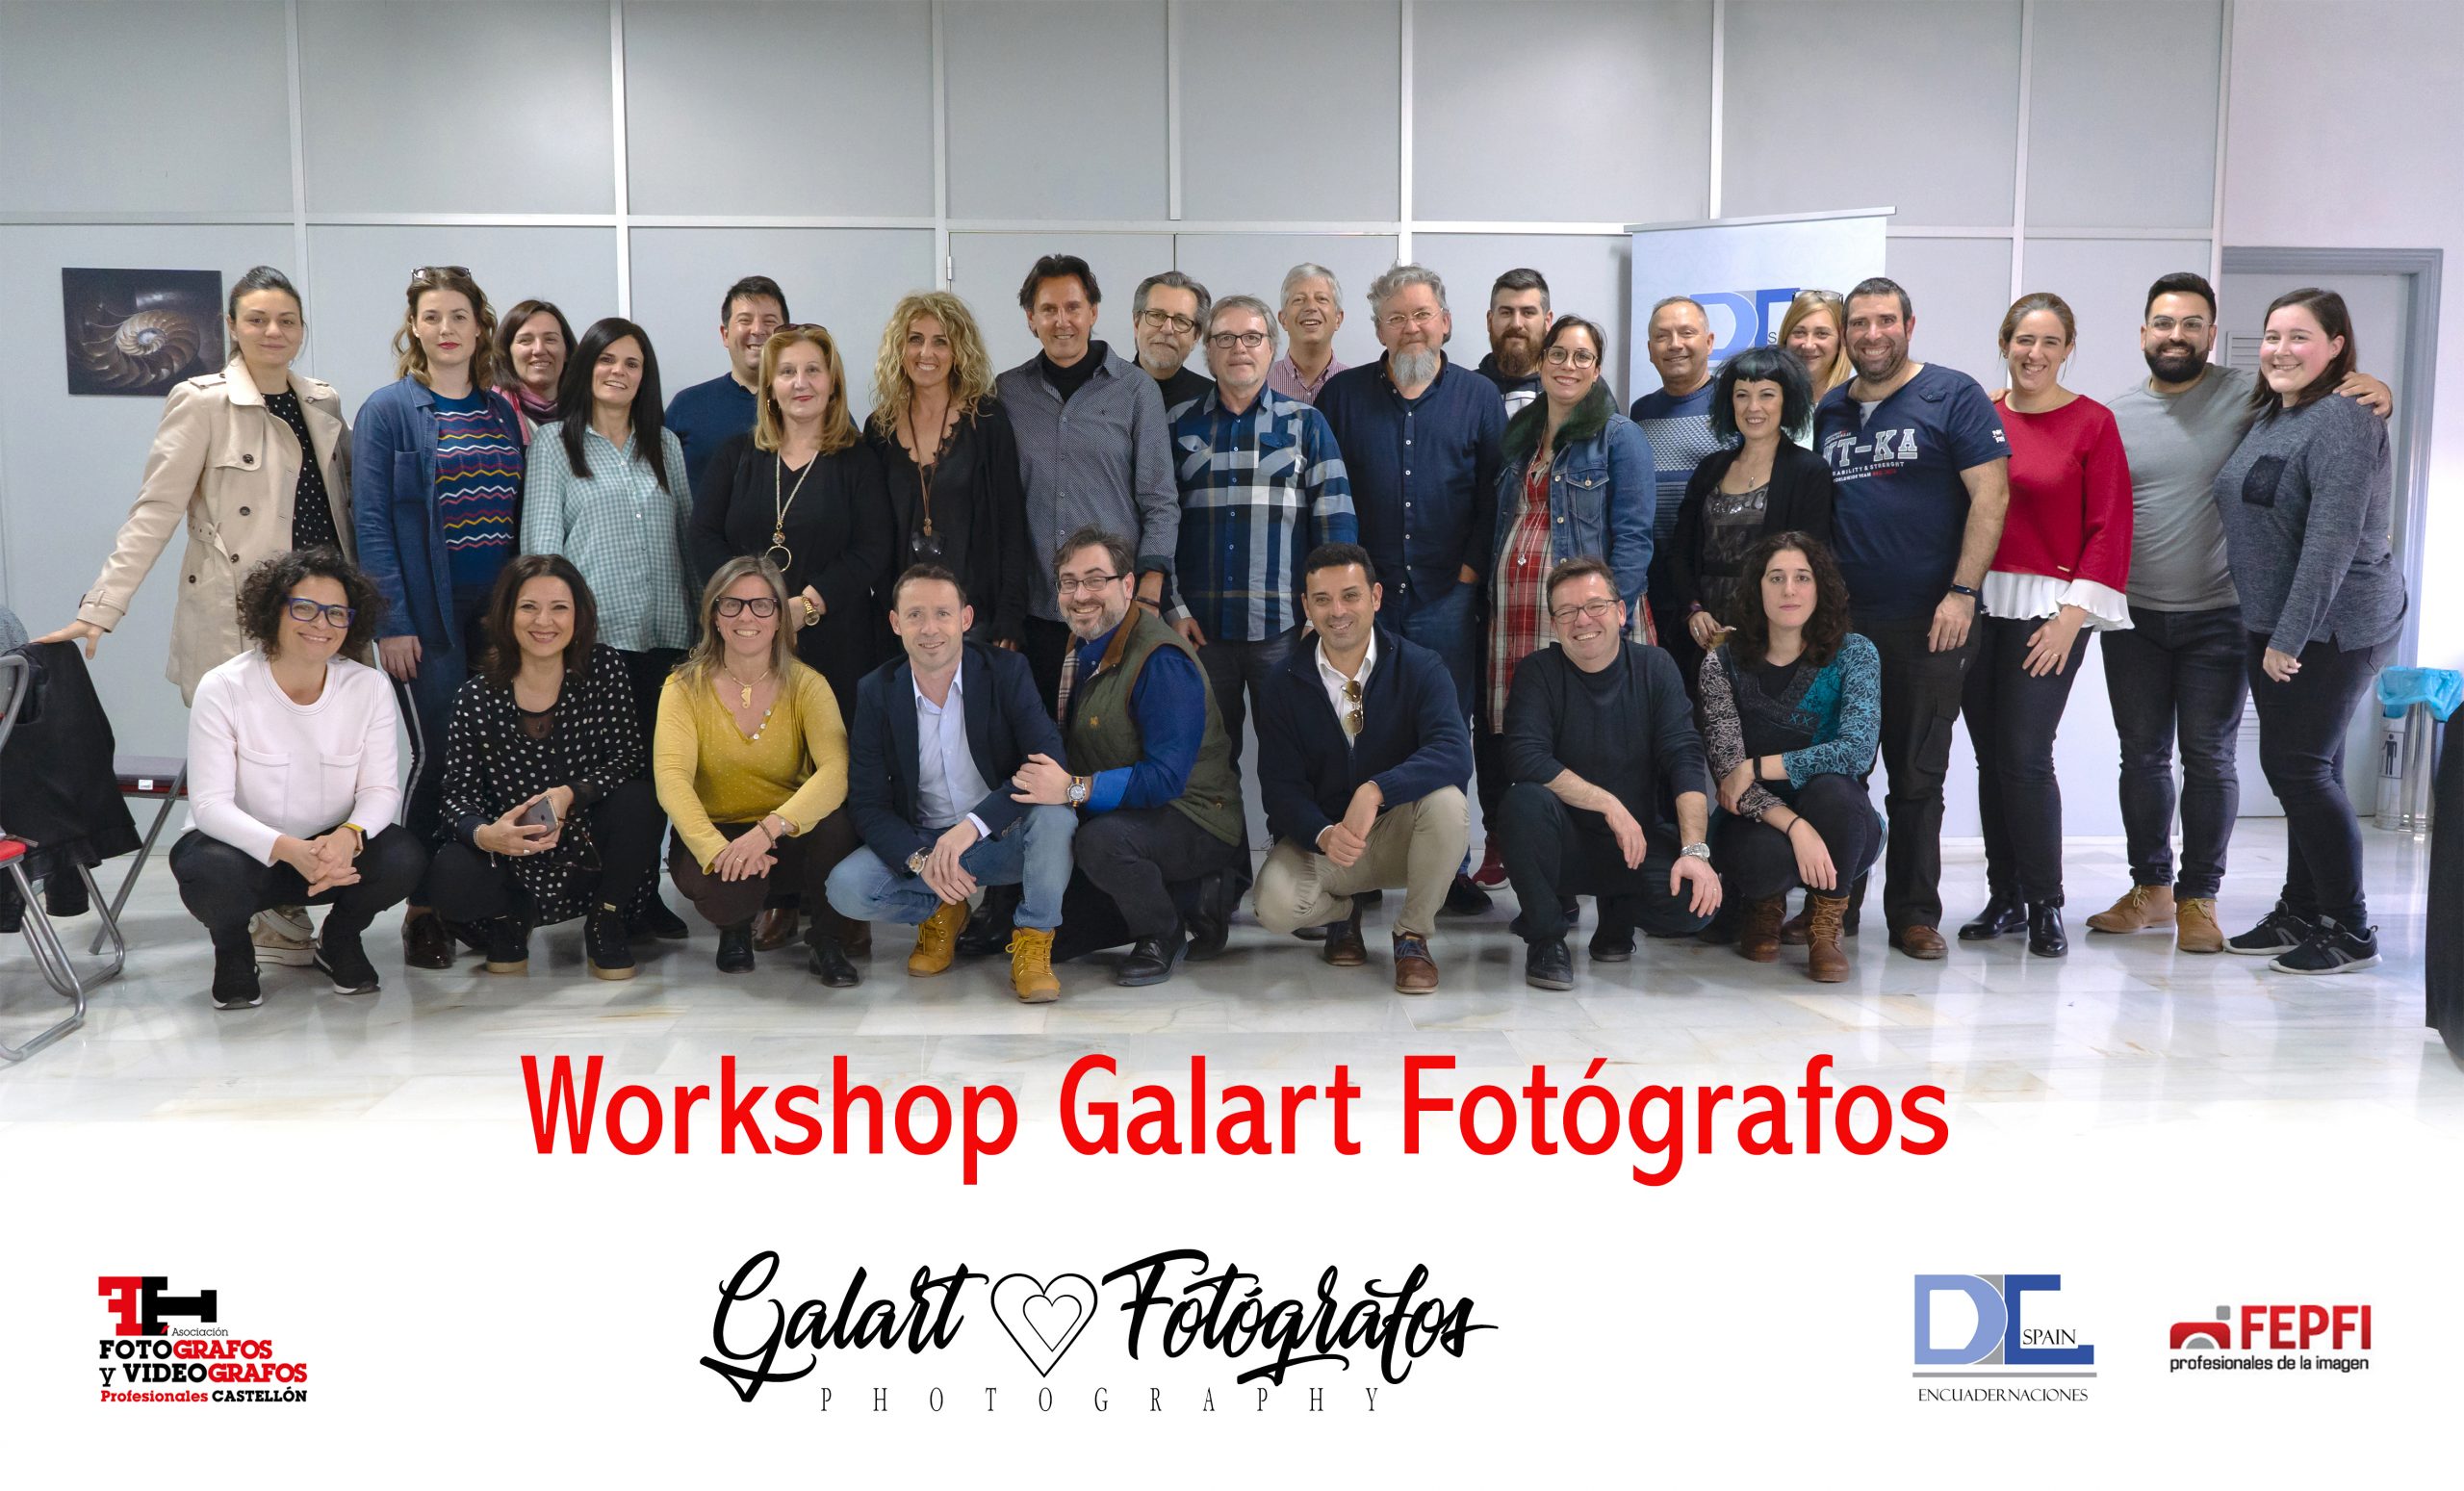 workshop galar fotógrafos, grupo de personas que son fotógrafos de castellón acudiendo a un curso de fotografía